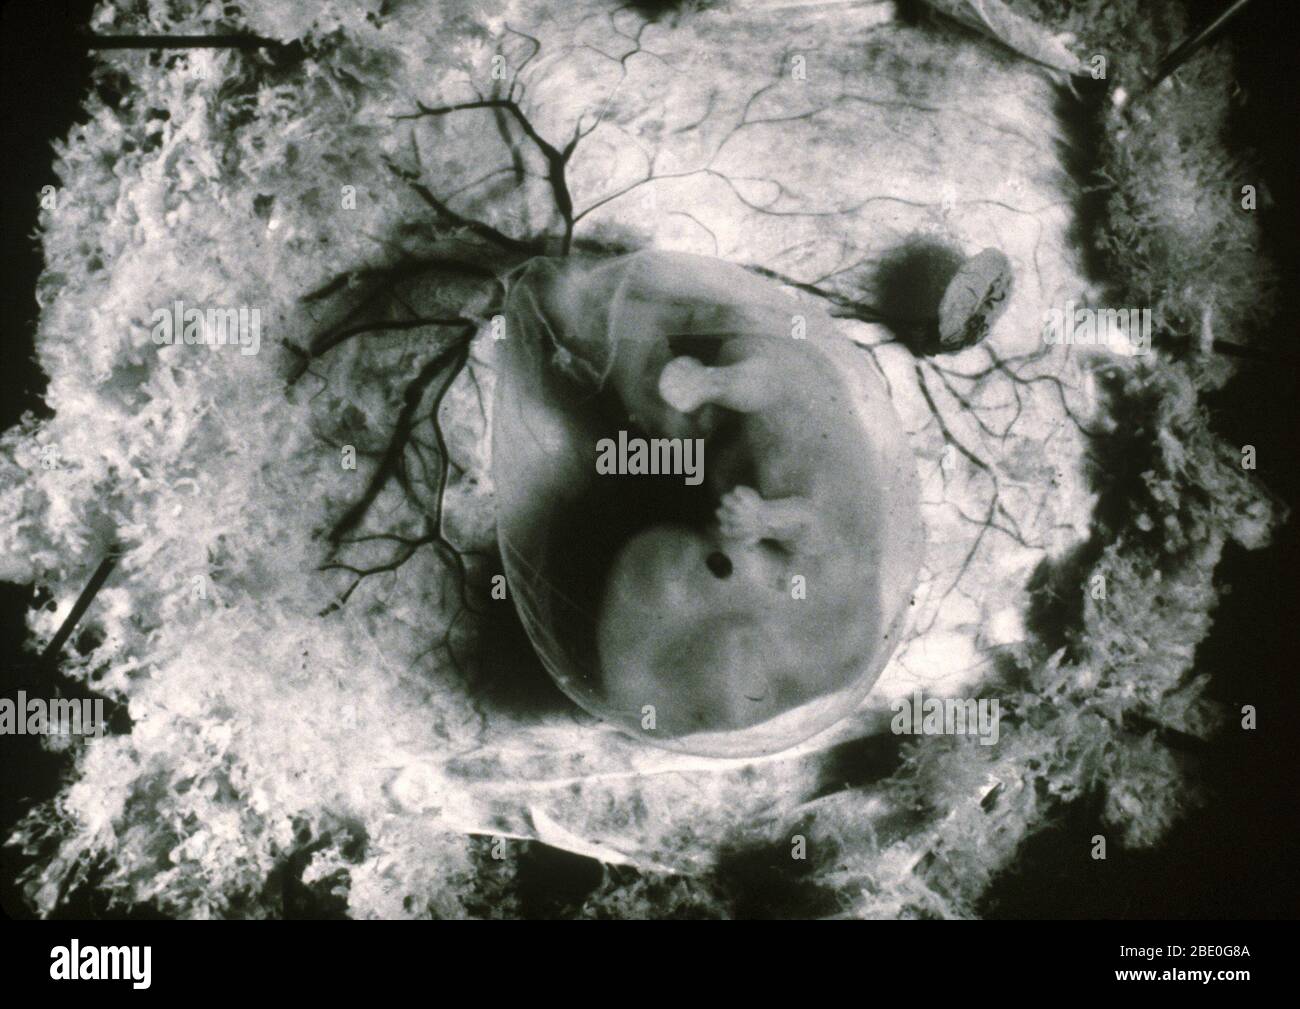 A human embryo after thirty-nine days of development. Stock Photo